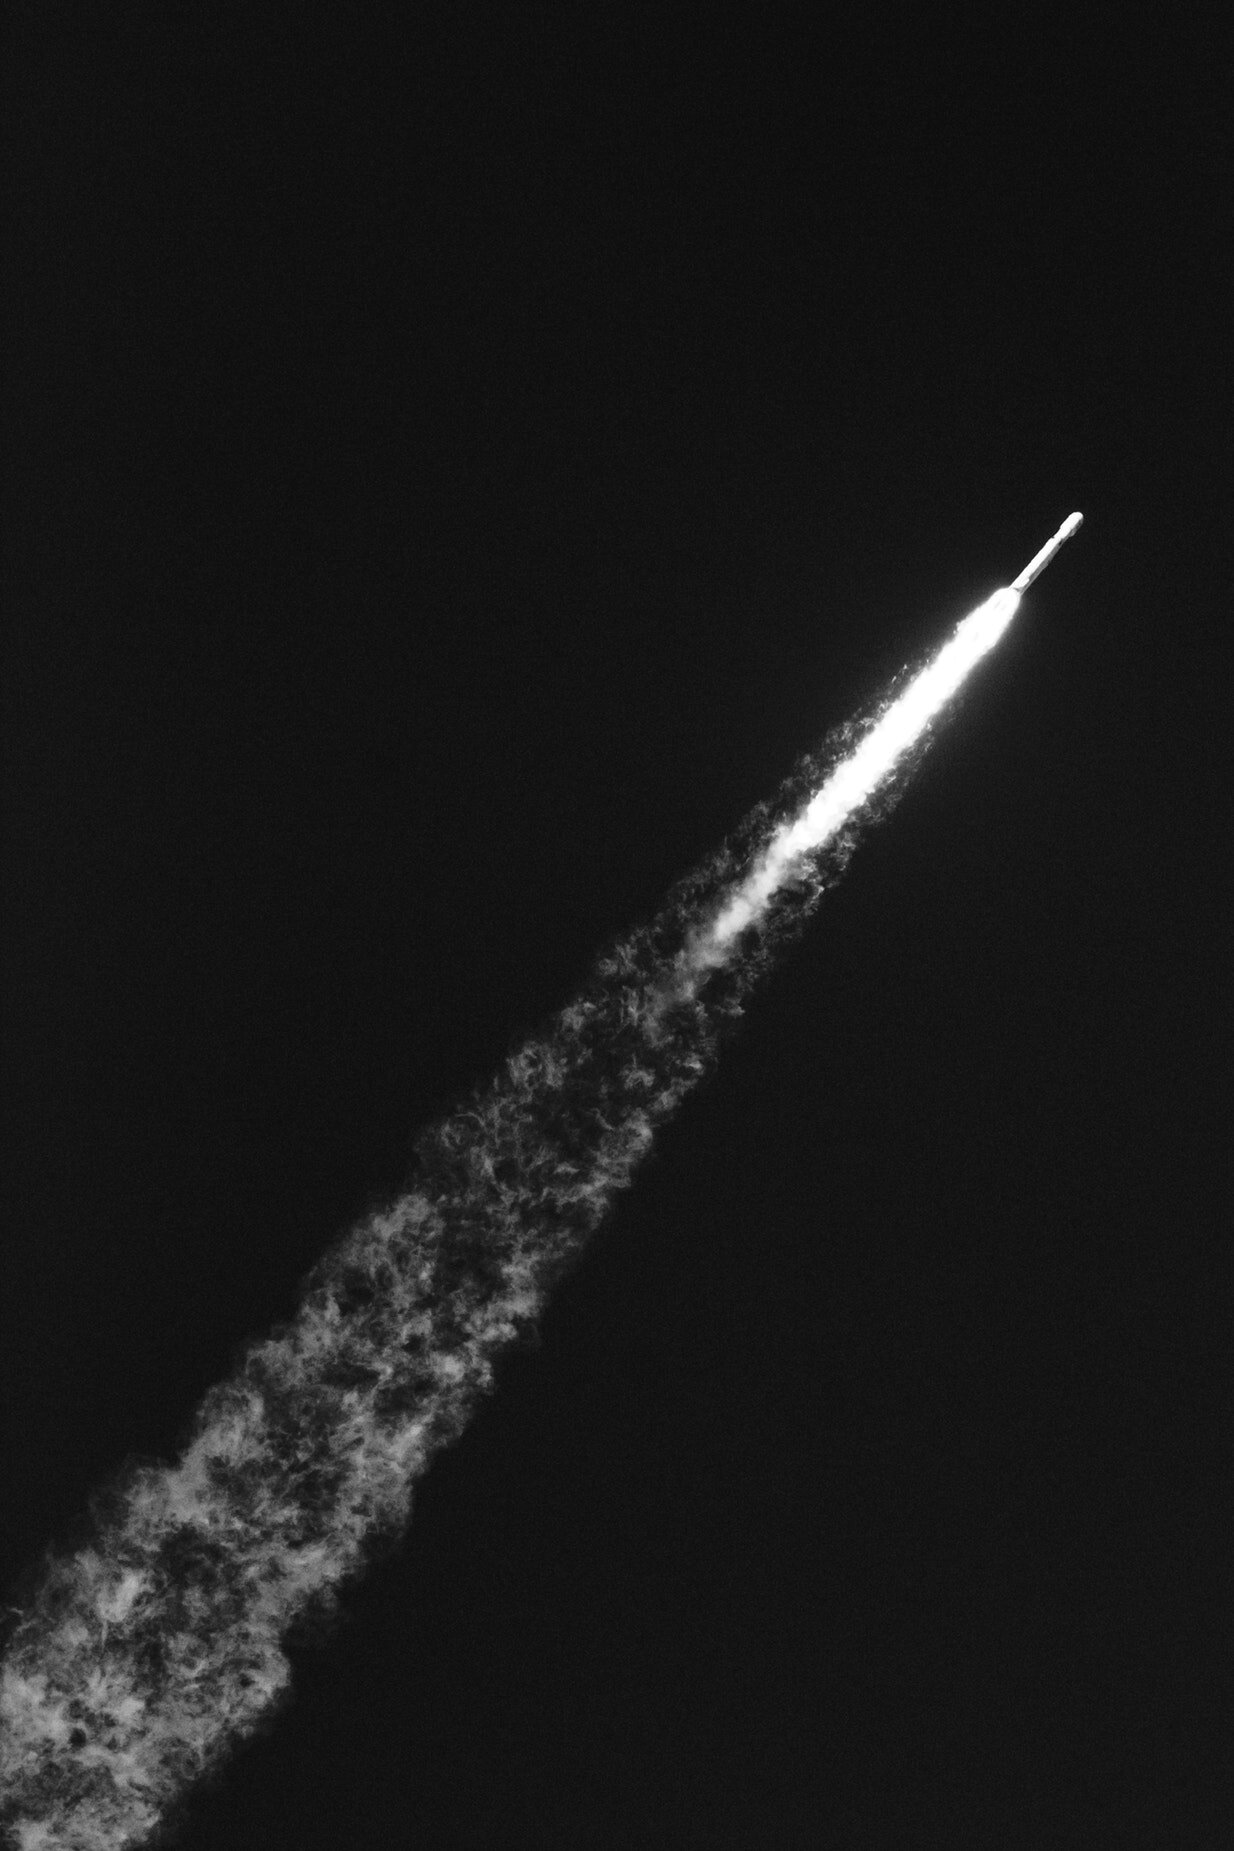 A rocket flies through the night sky